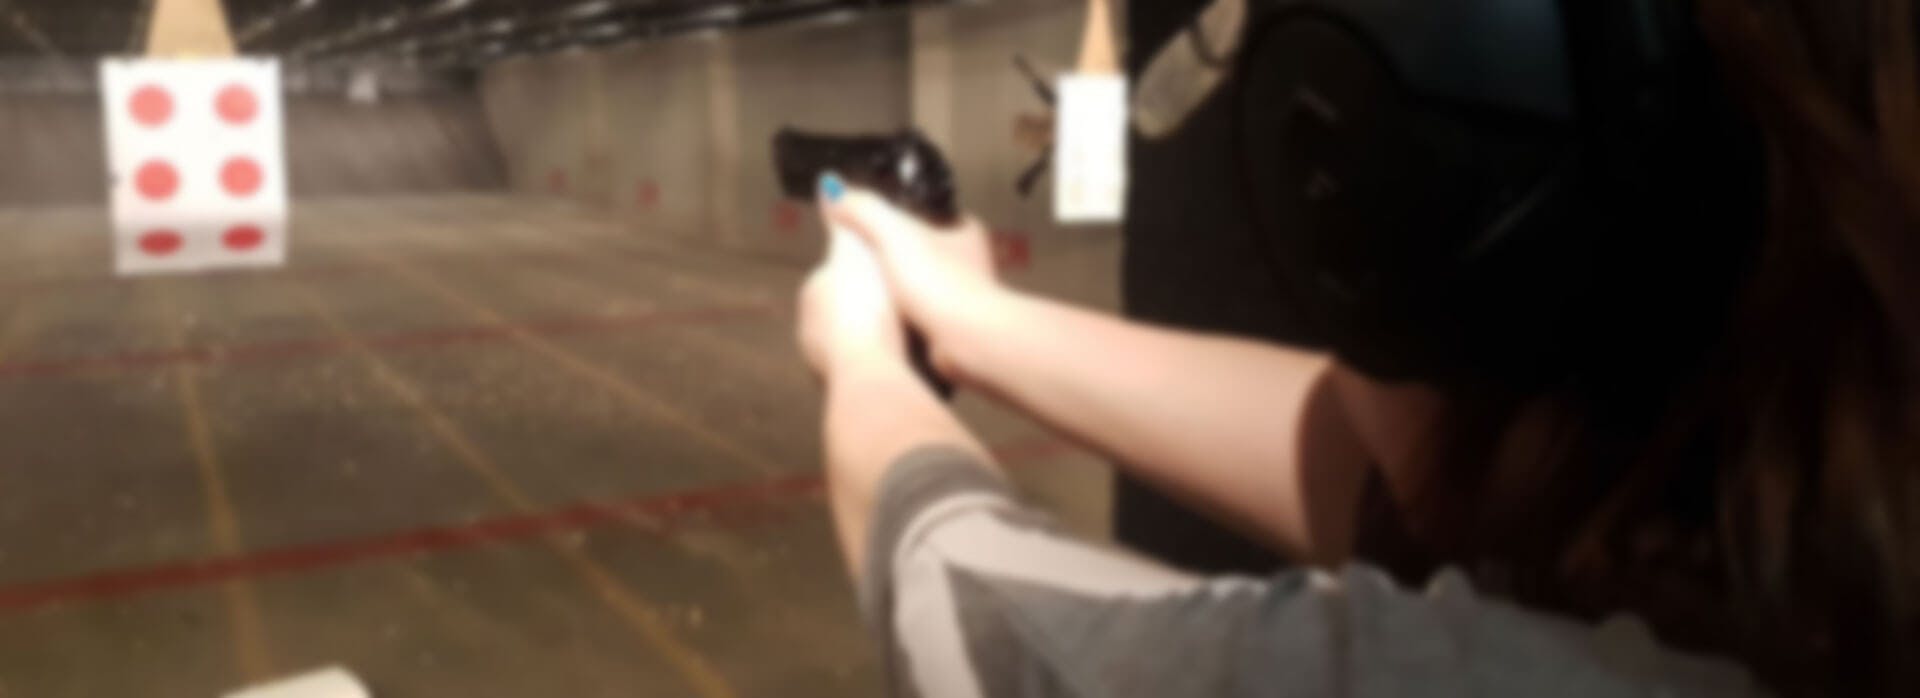 A person aiming a gun at a tartget